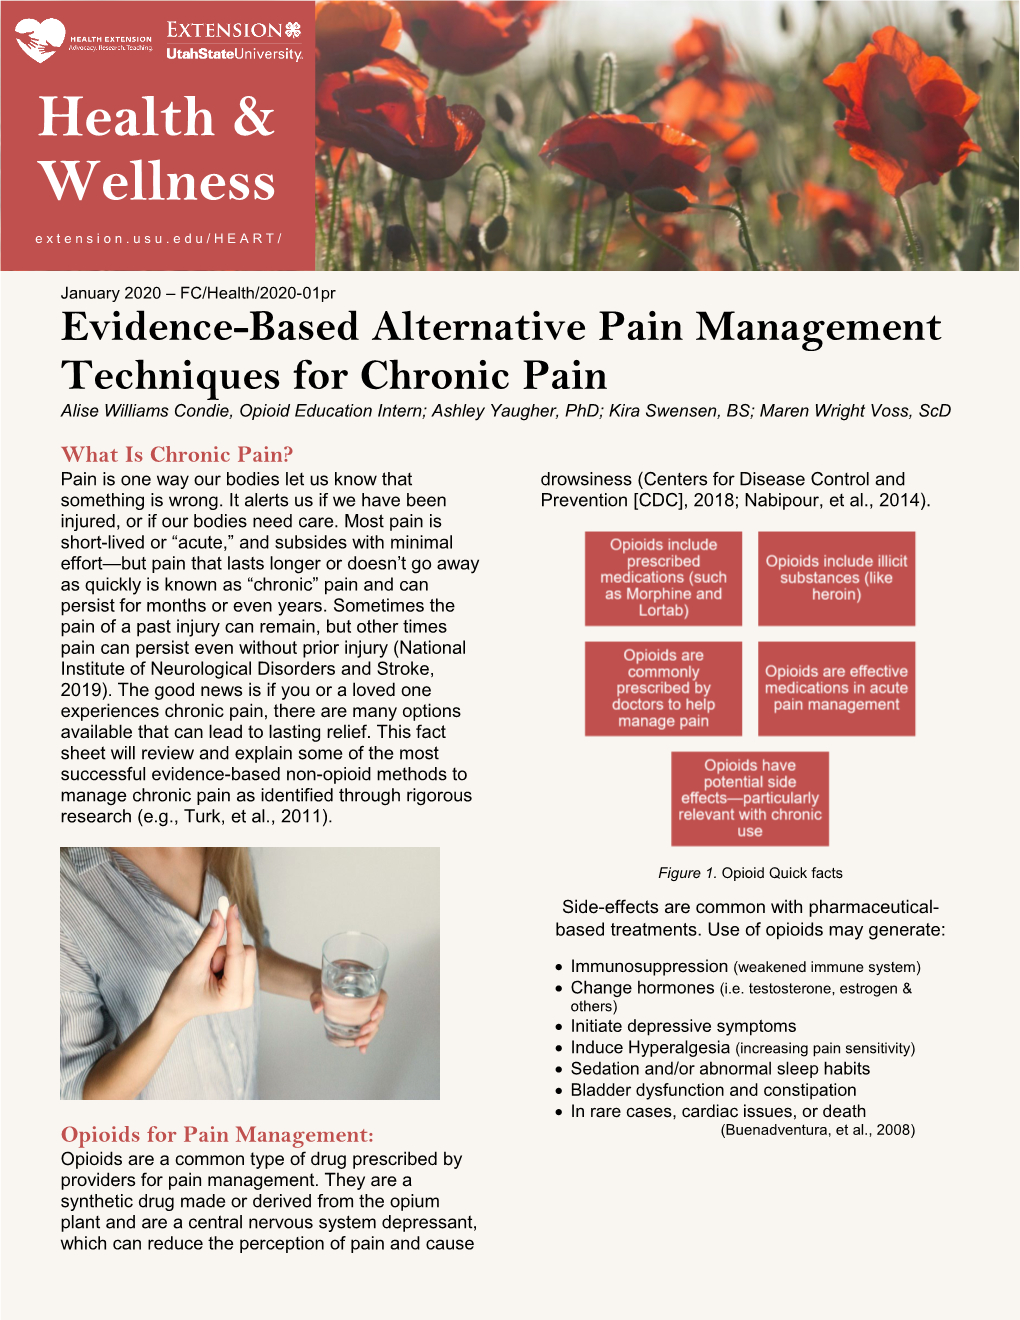 Evidence-Based Alternative Pain Management Techniques For